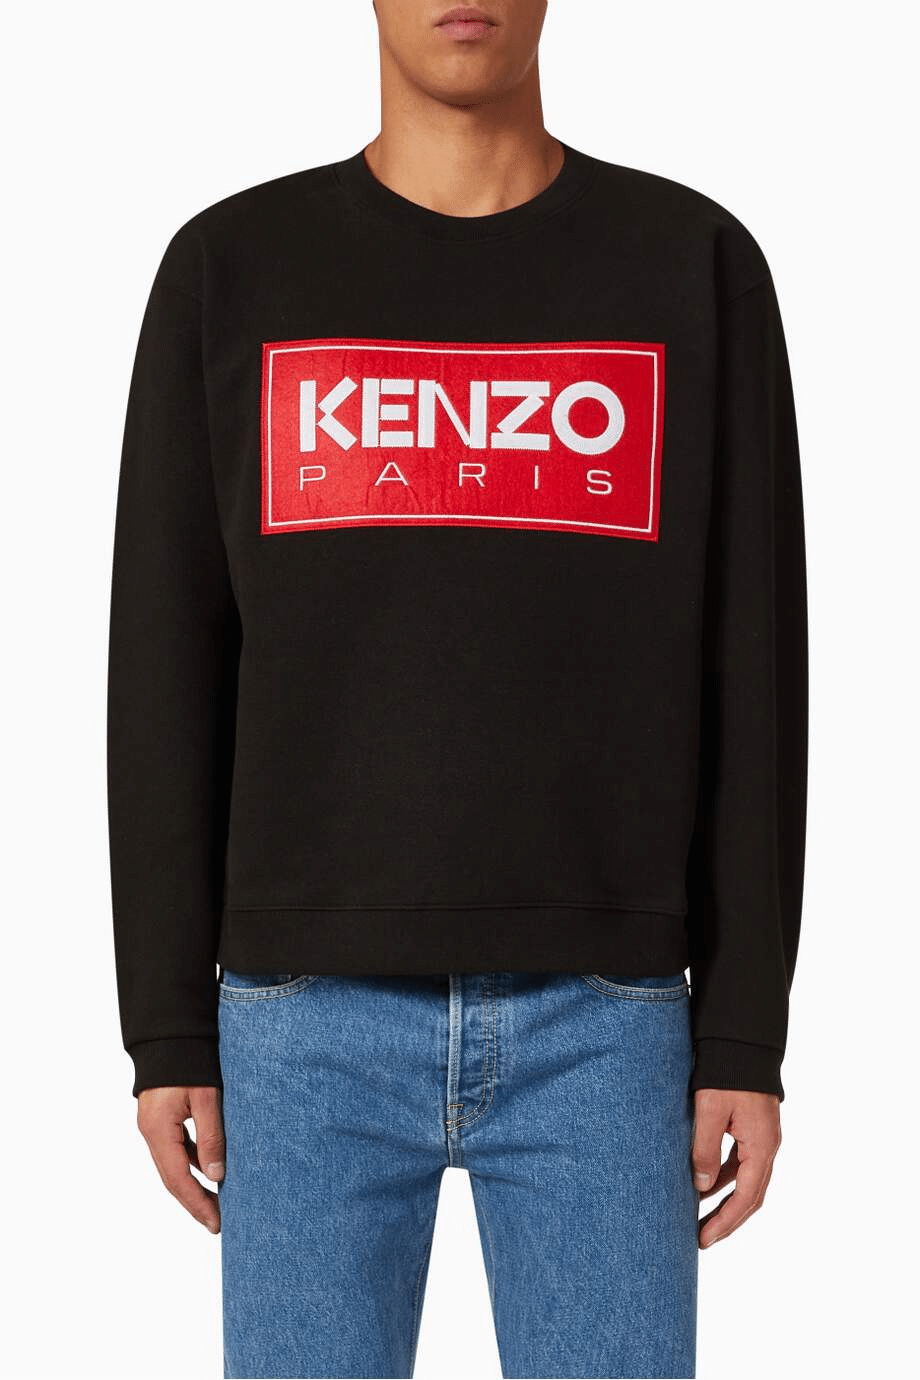 KENZO Paris Sweatshirt in Cotton